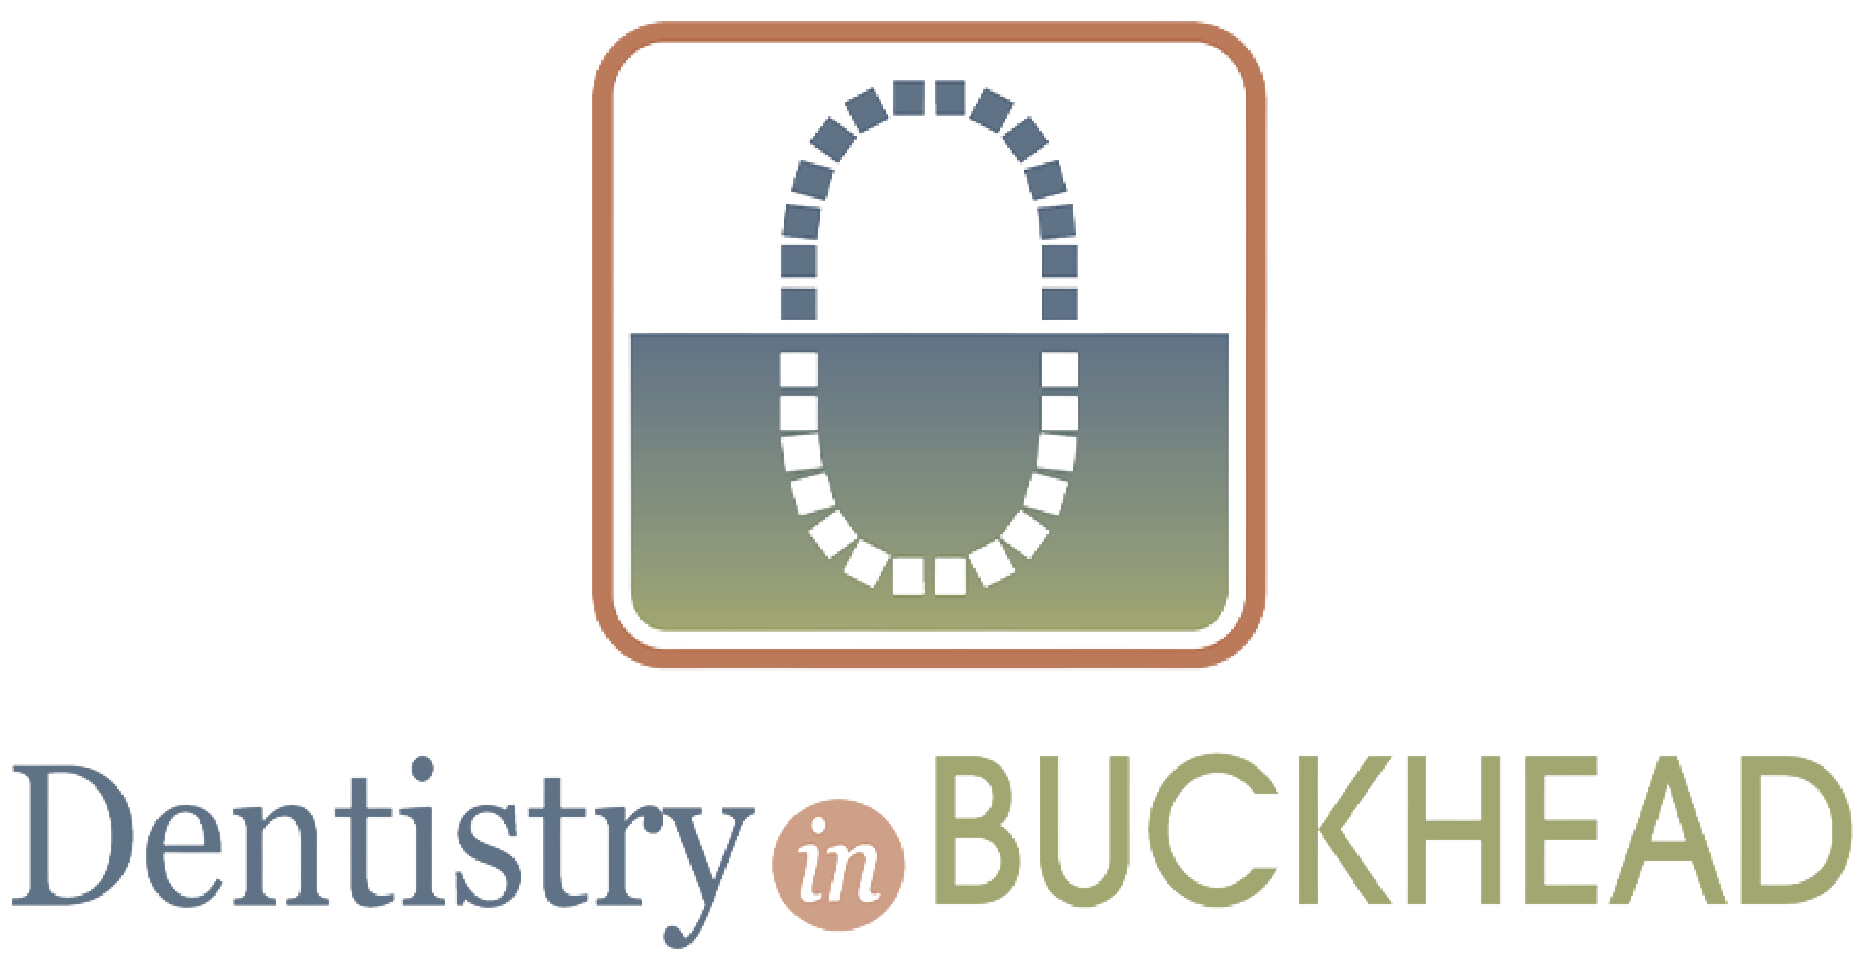 Atlanta Dentistry in Buckhead logo